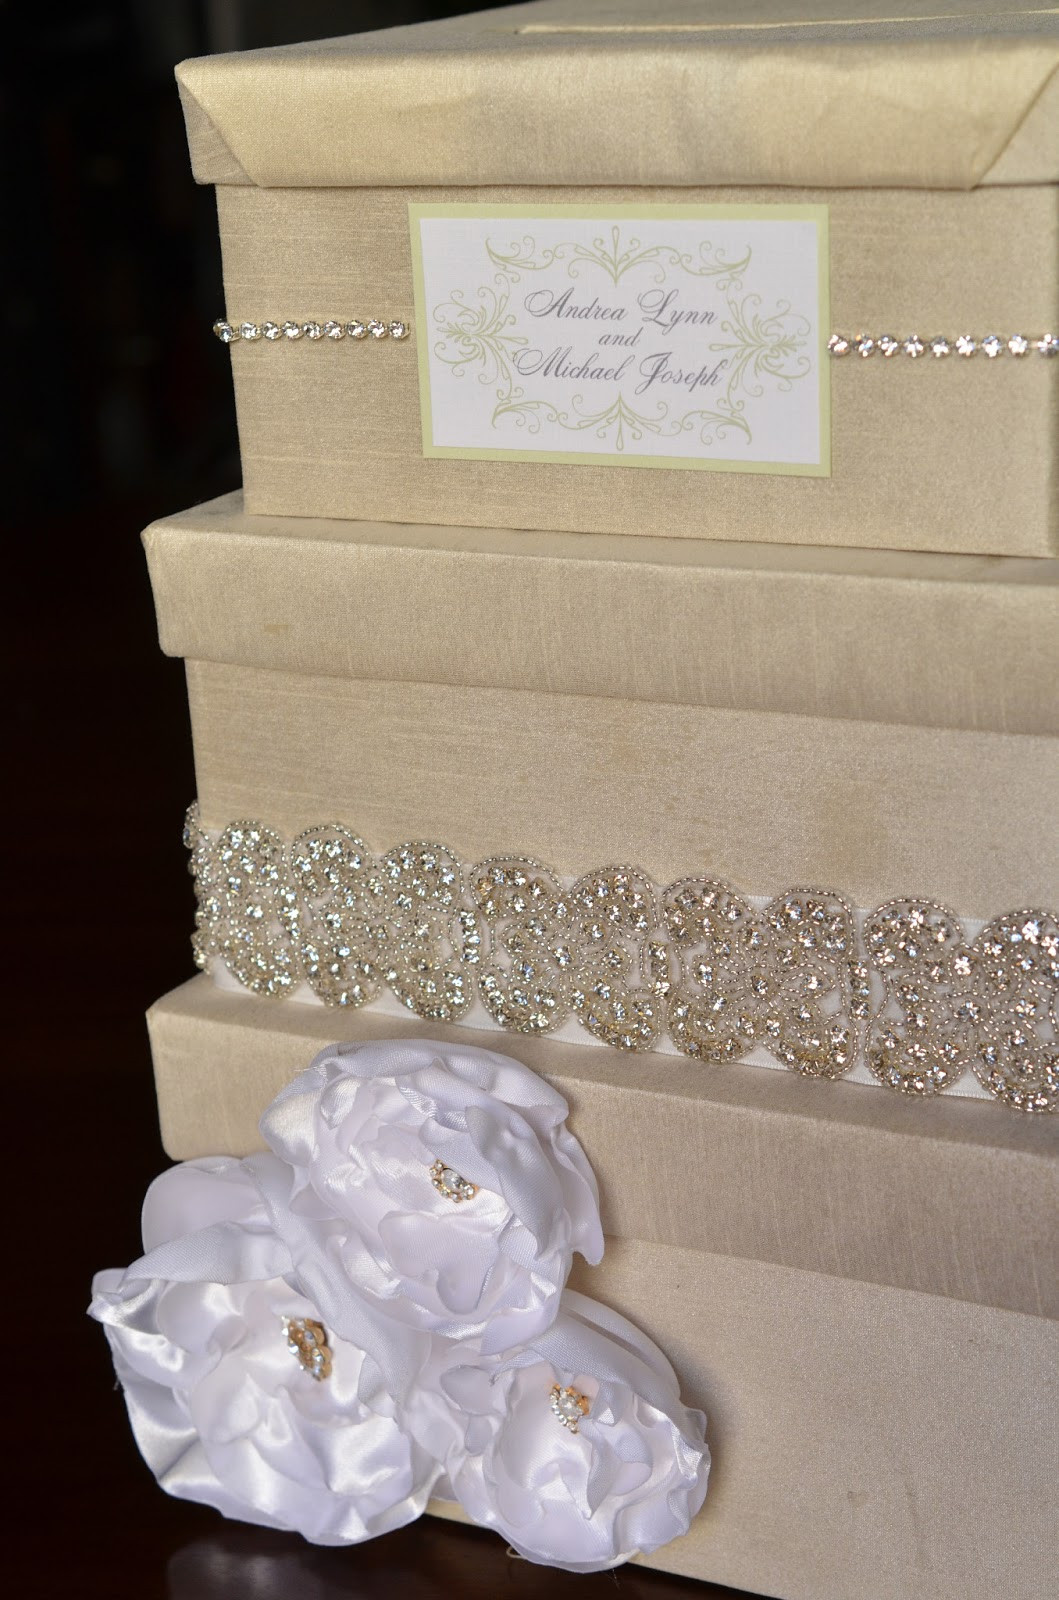 Best ideas about DIY Wedding Cards
. Save or Pin DIY Wedding Card Box Tutorial Andrea Lynn HANDMADE Now.